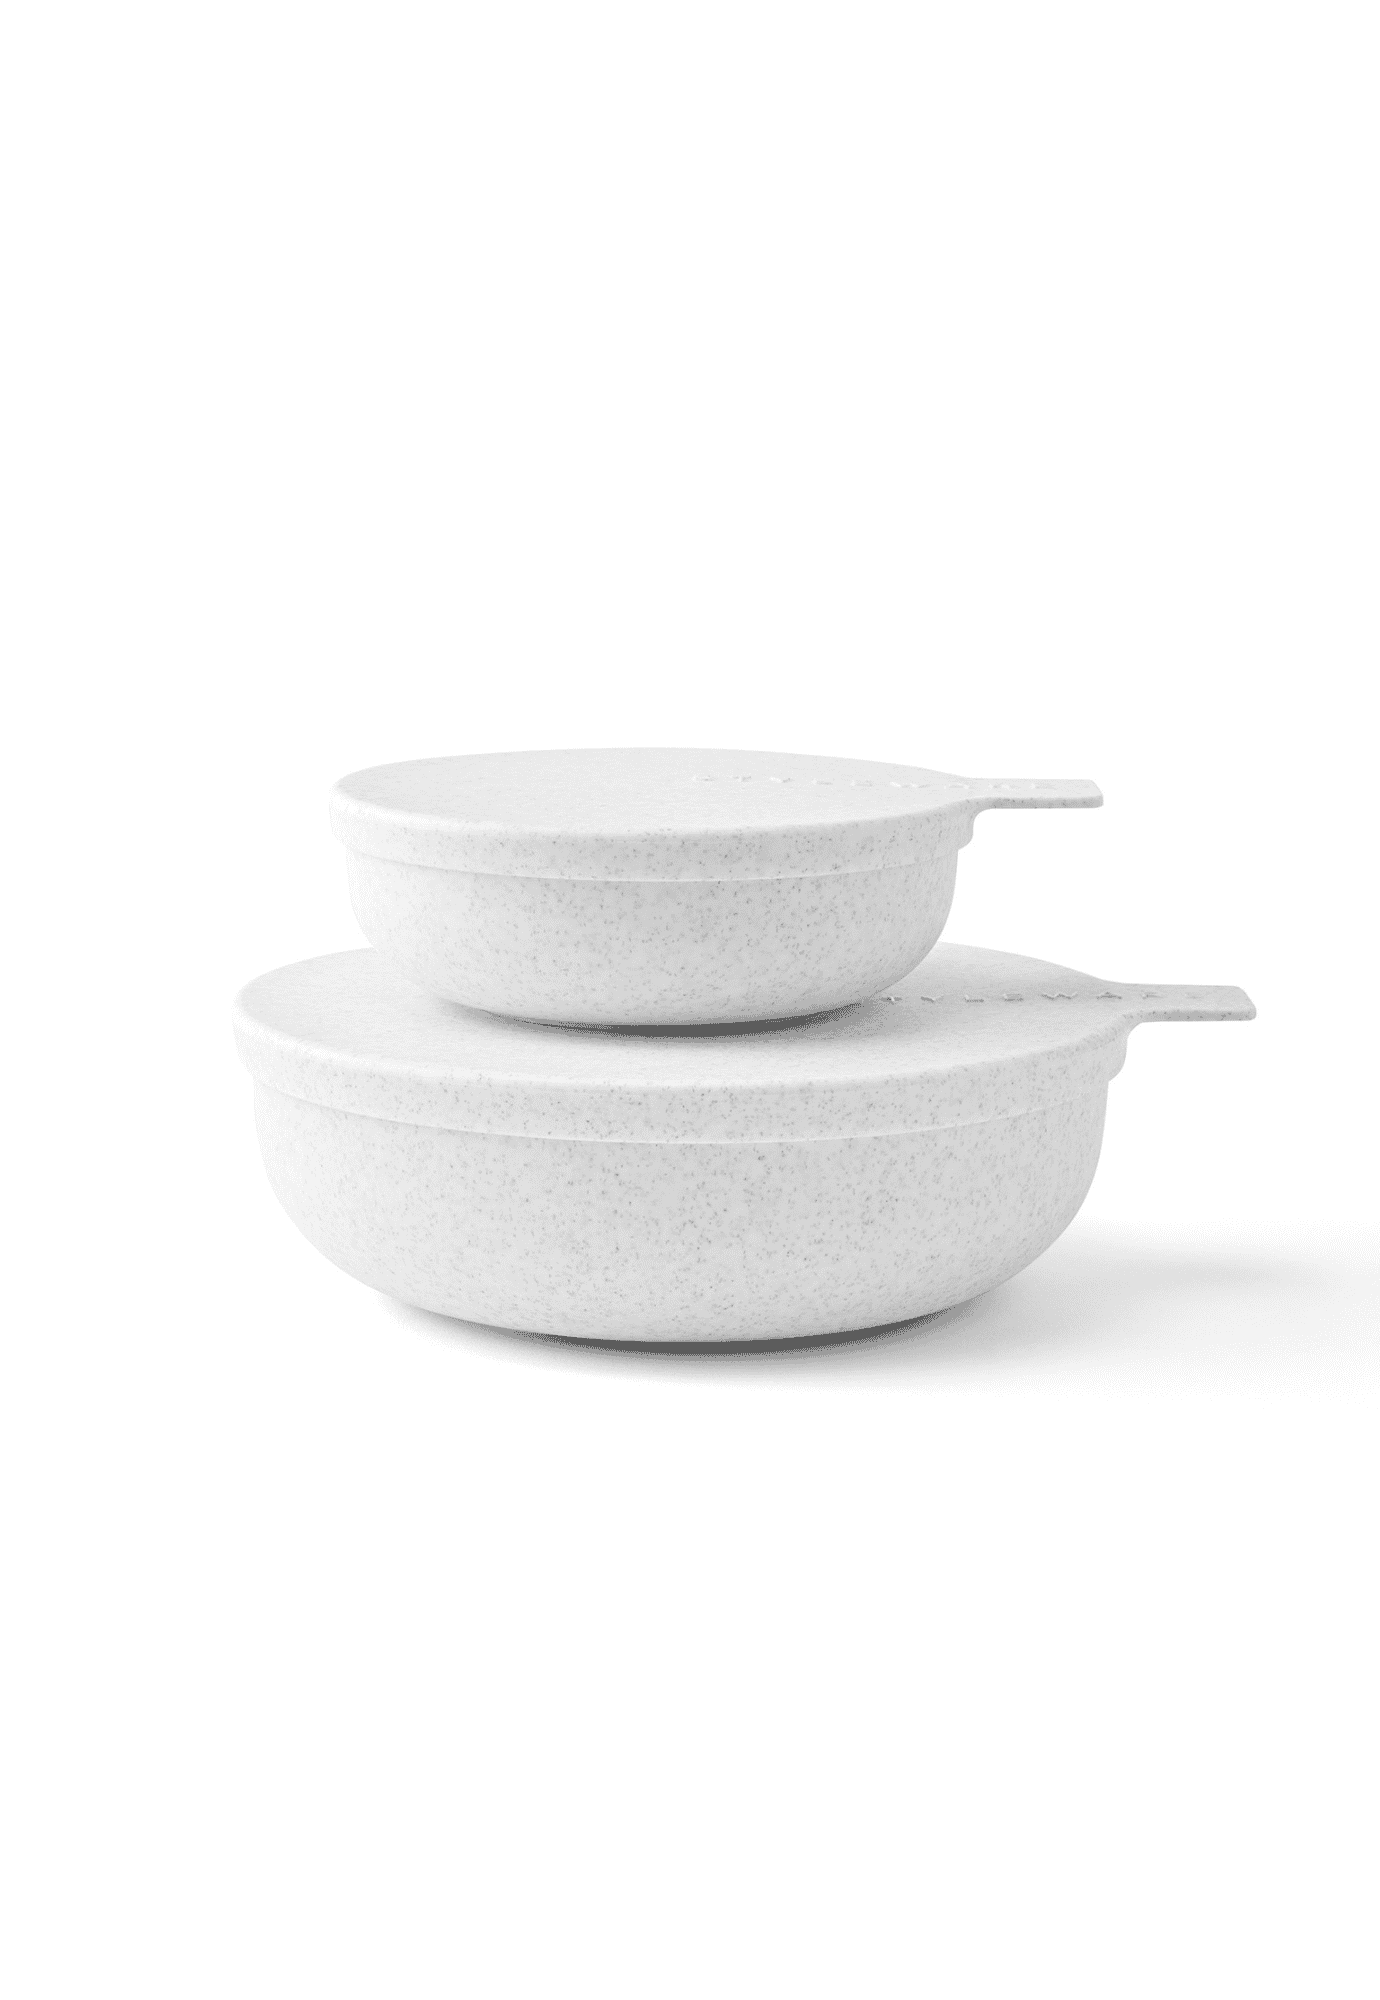 styleware - 2 piece nesting bowls